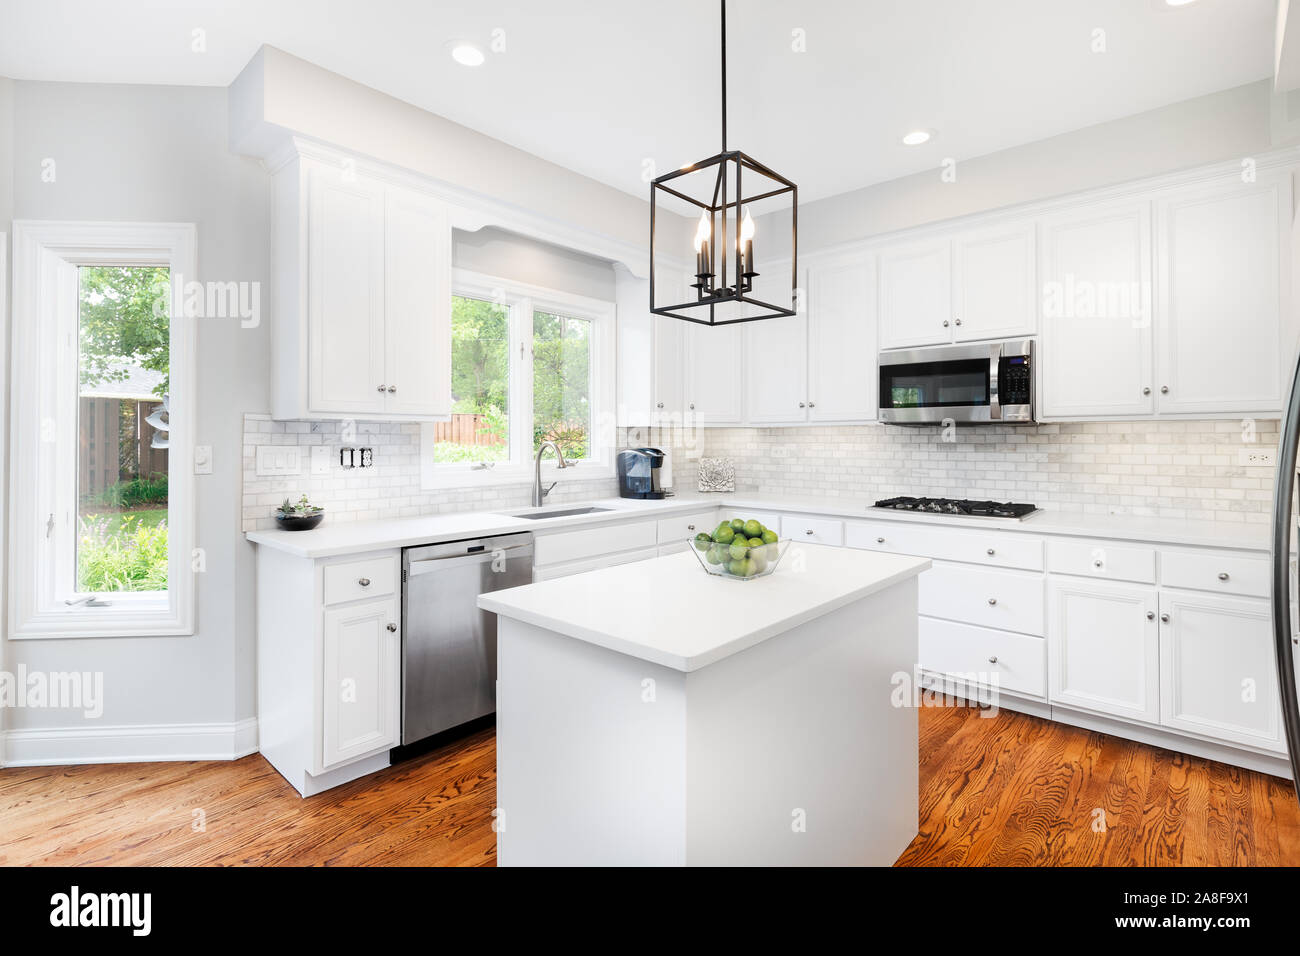 A Bright Kitchen With White Cabinets White Granite Counter Tops